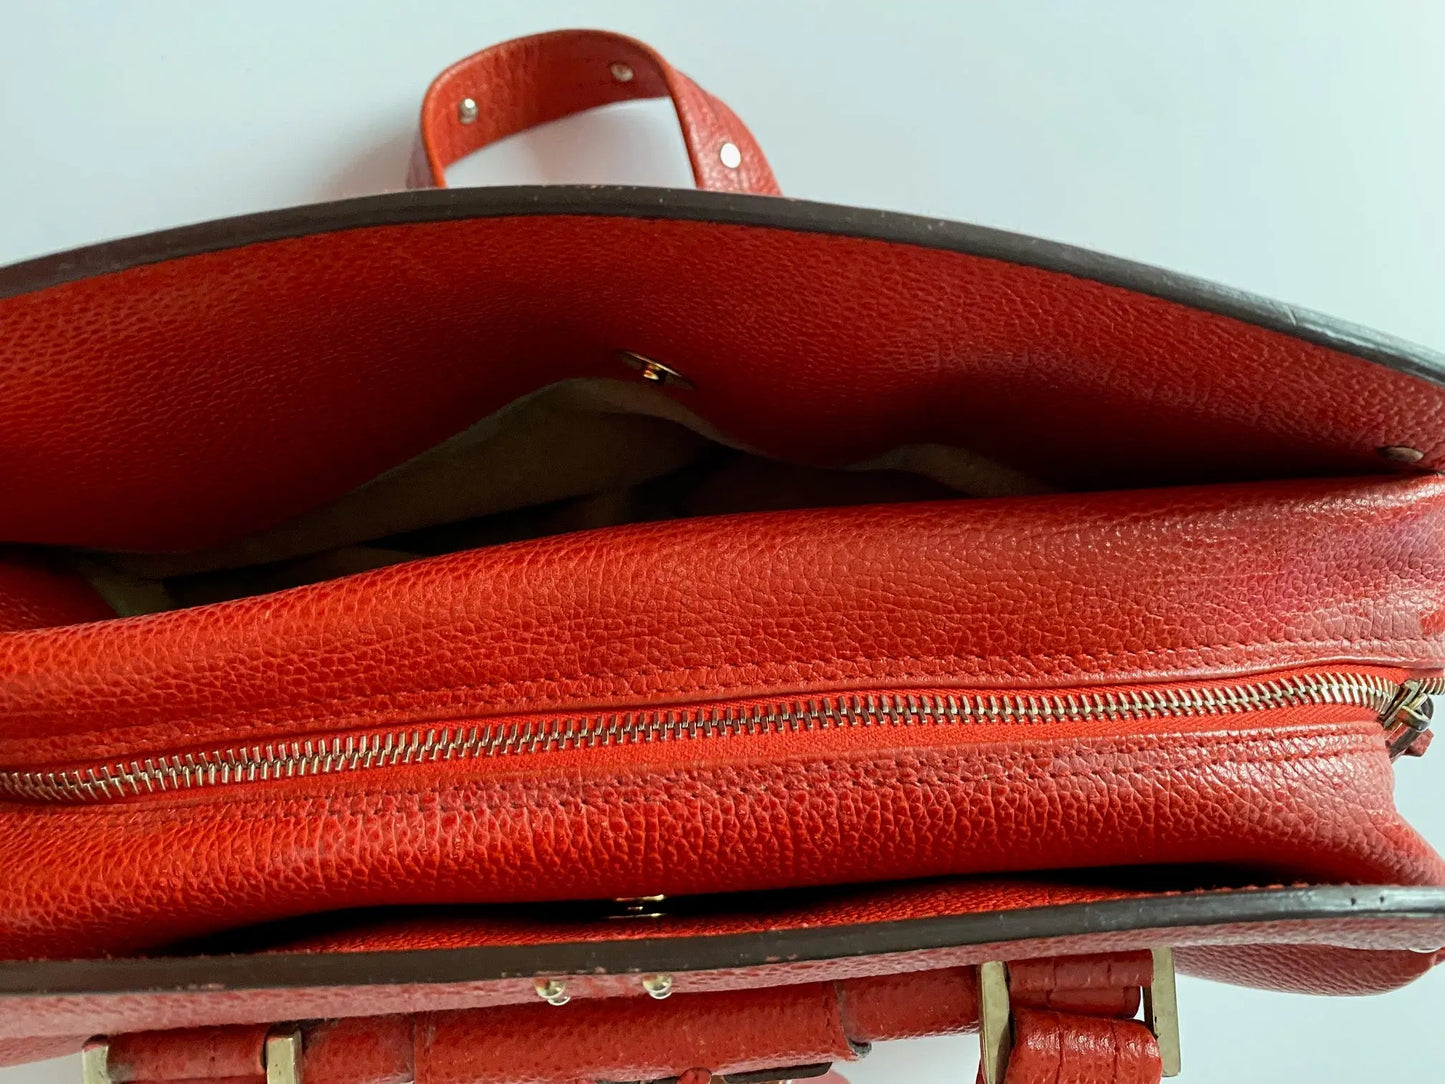 Red Leather Handbag by Luella Bartley Vivienne Austin